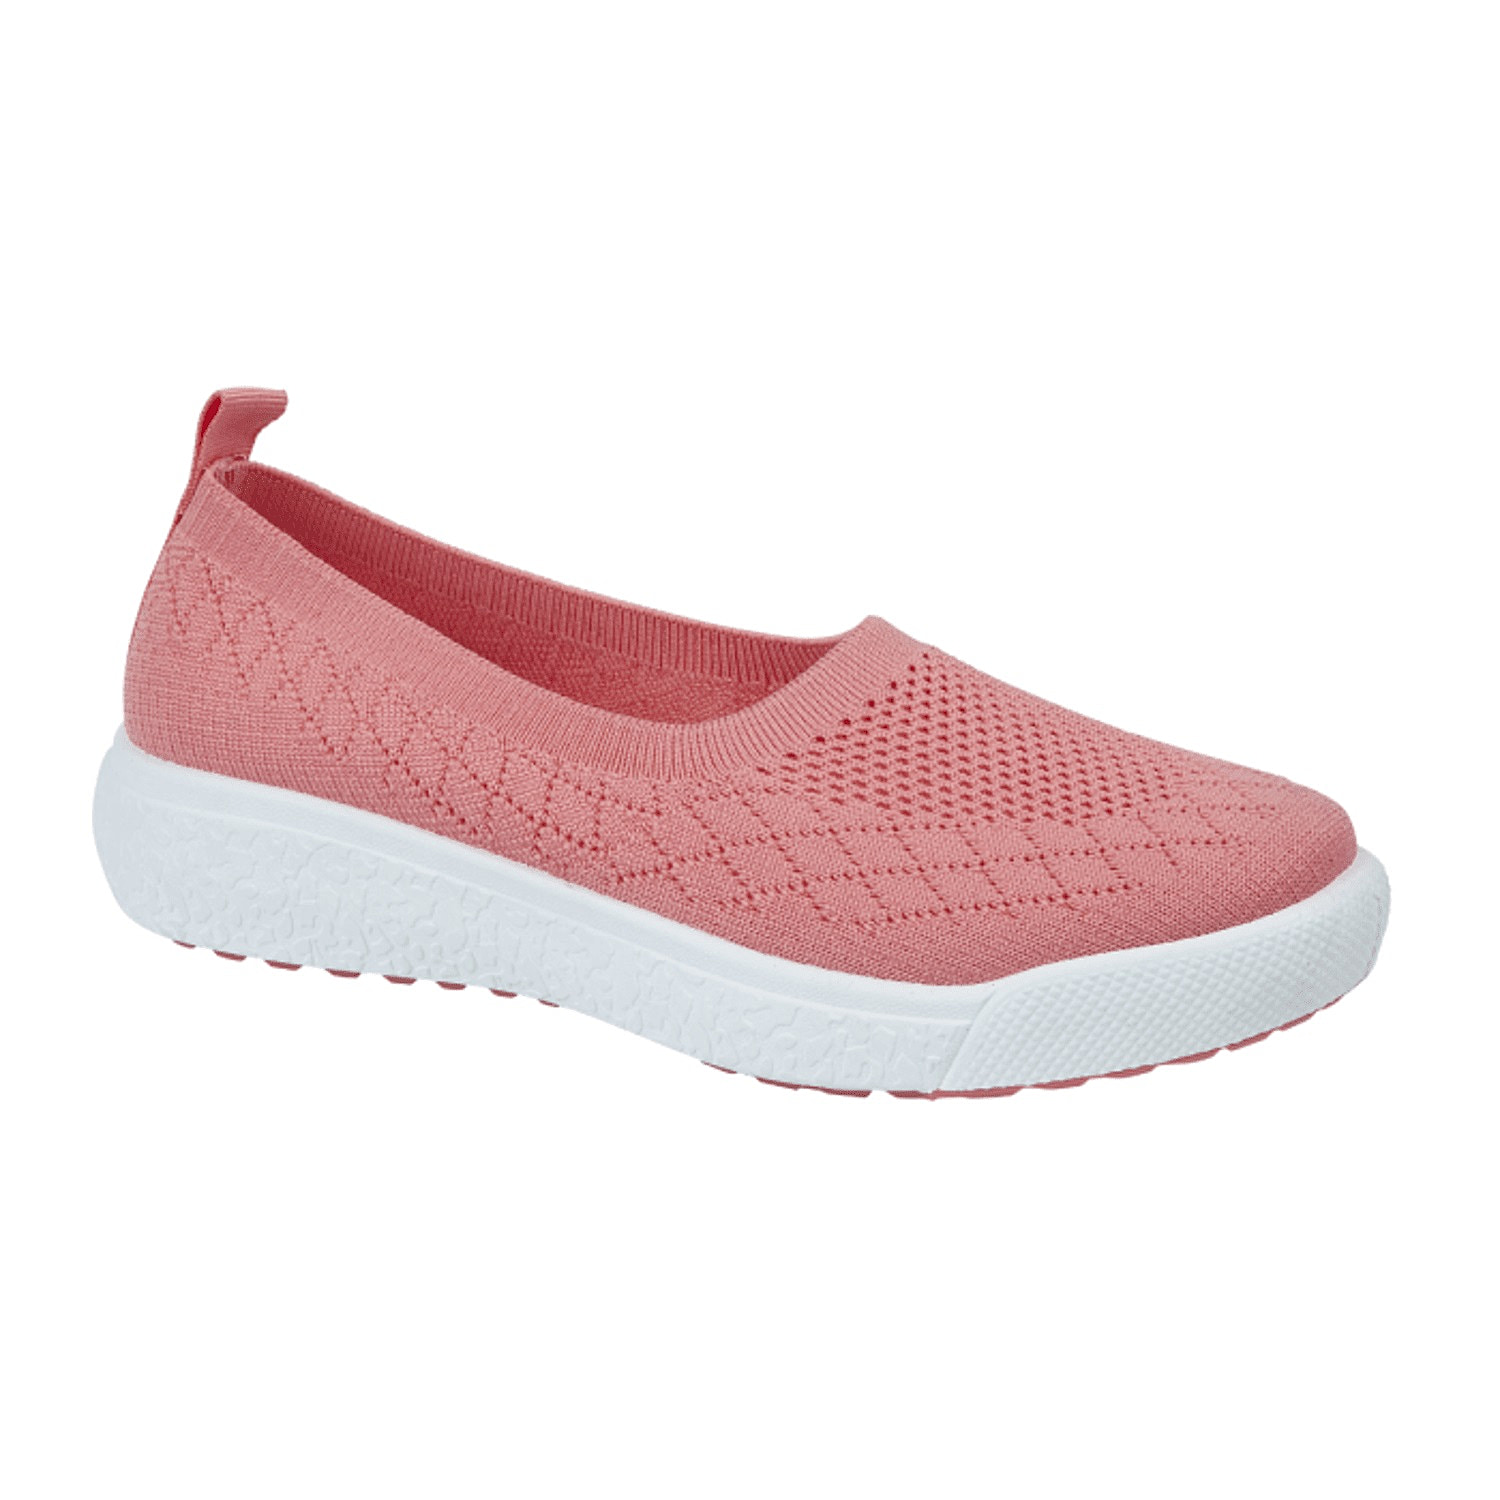 Ladies-Sandal-Size-4-Coral